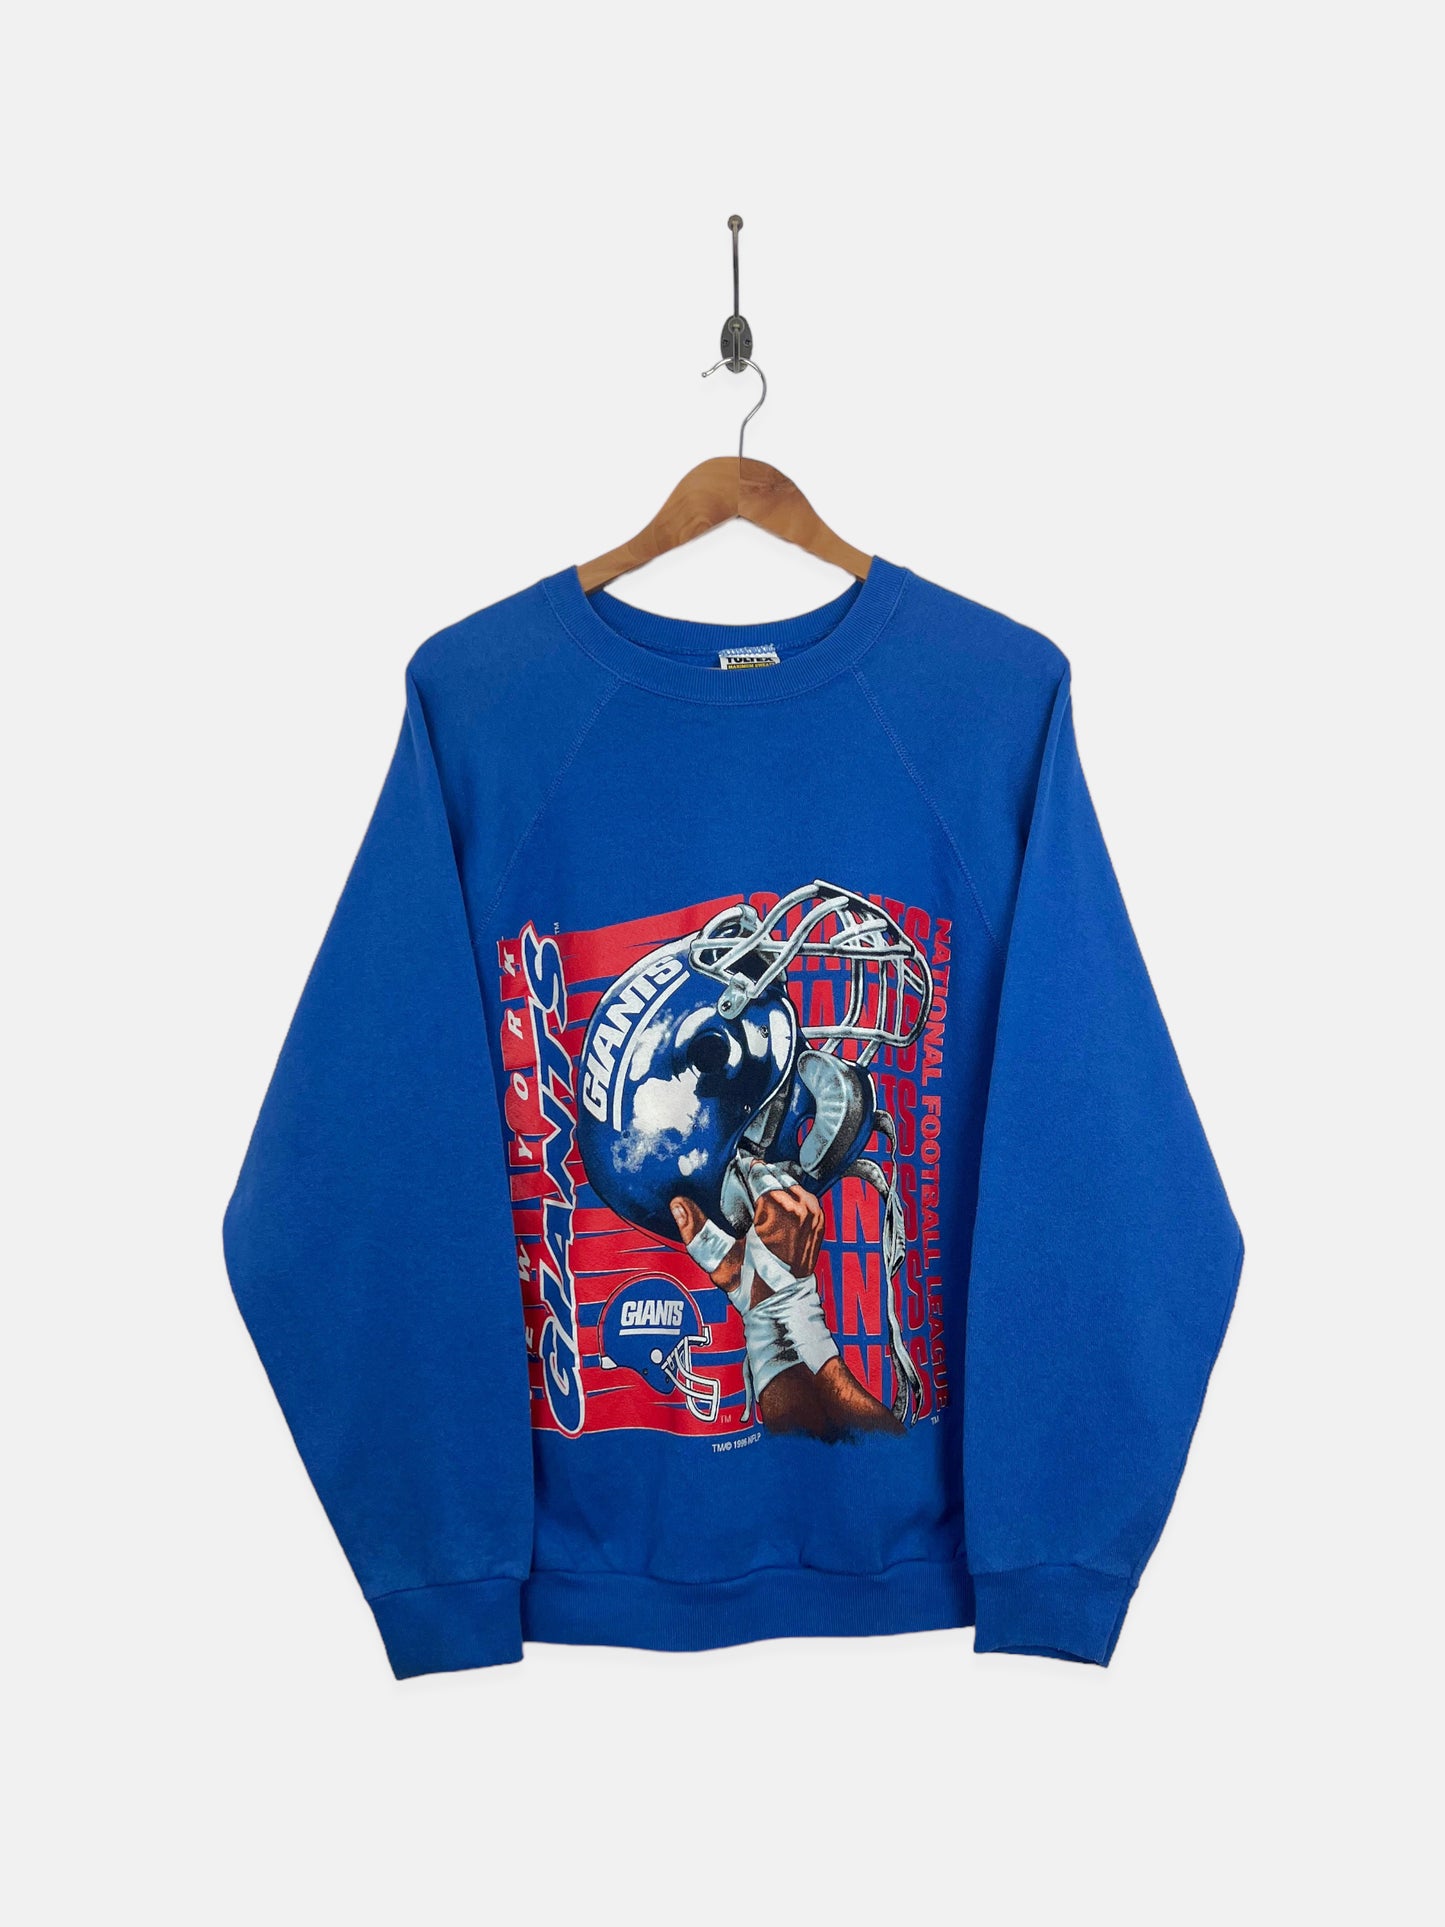 1996 New York Giants NFL USA Made Vintage Sweatshirt Size M